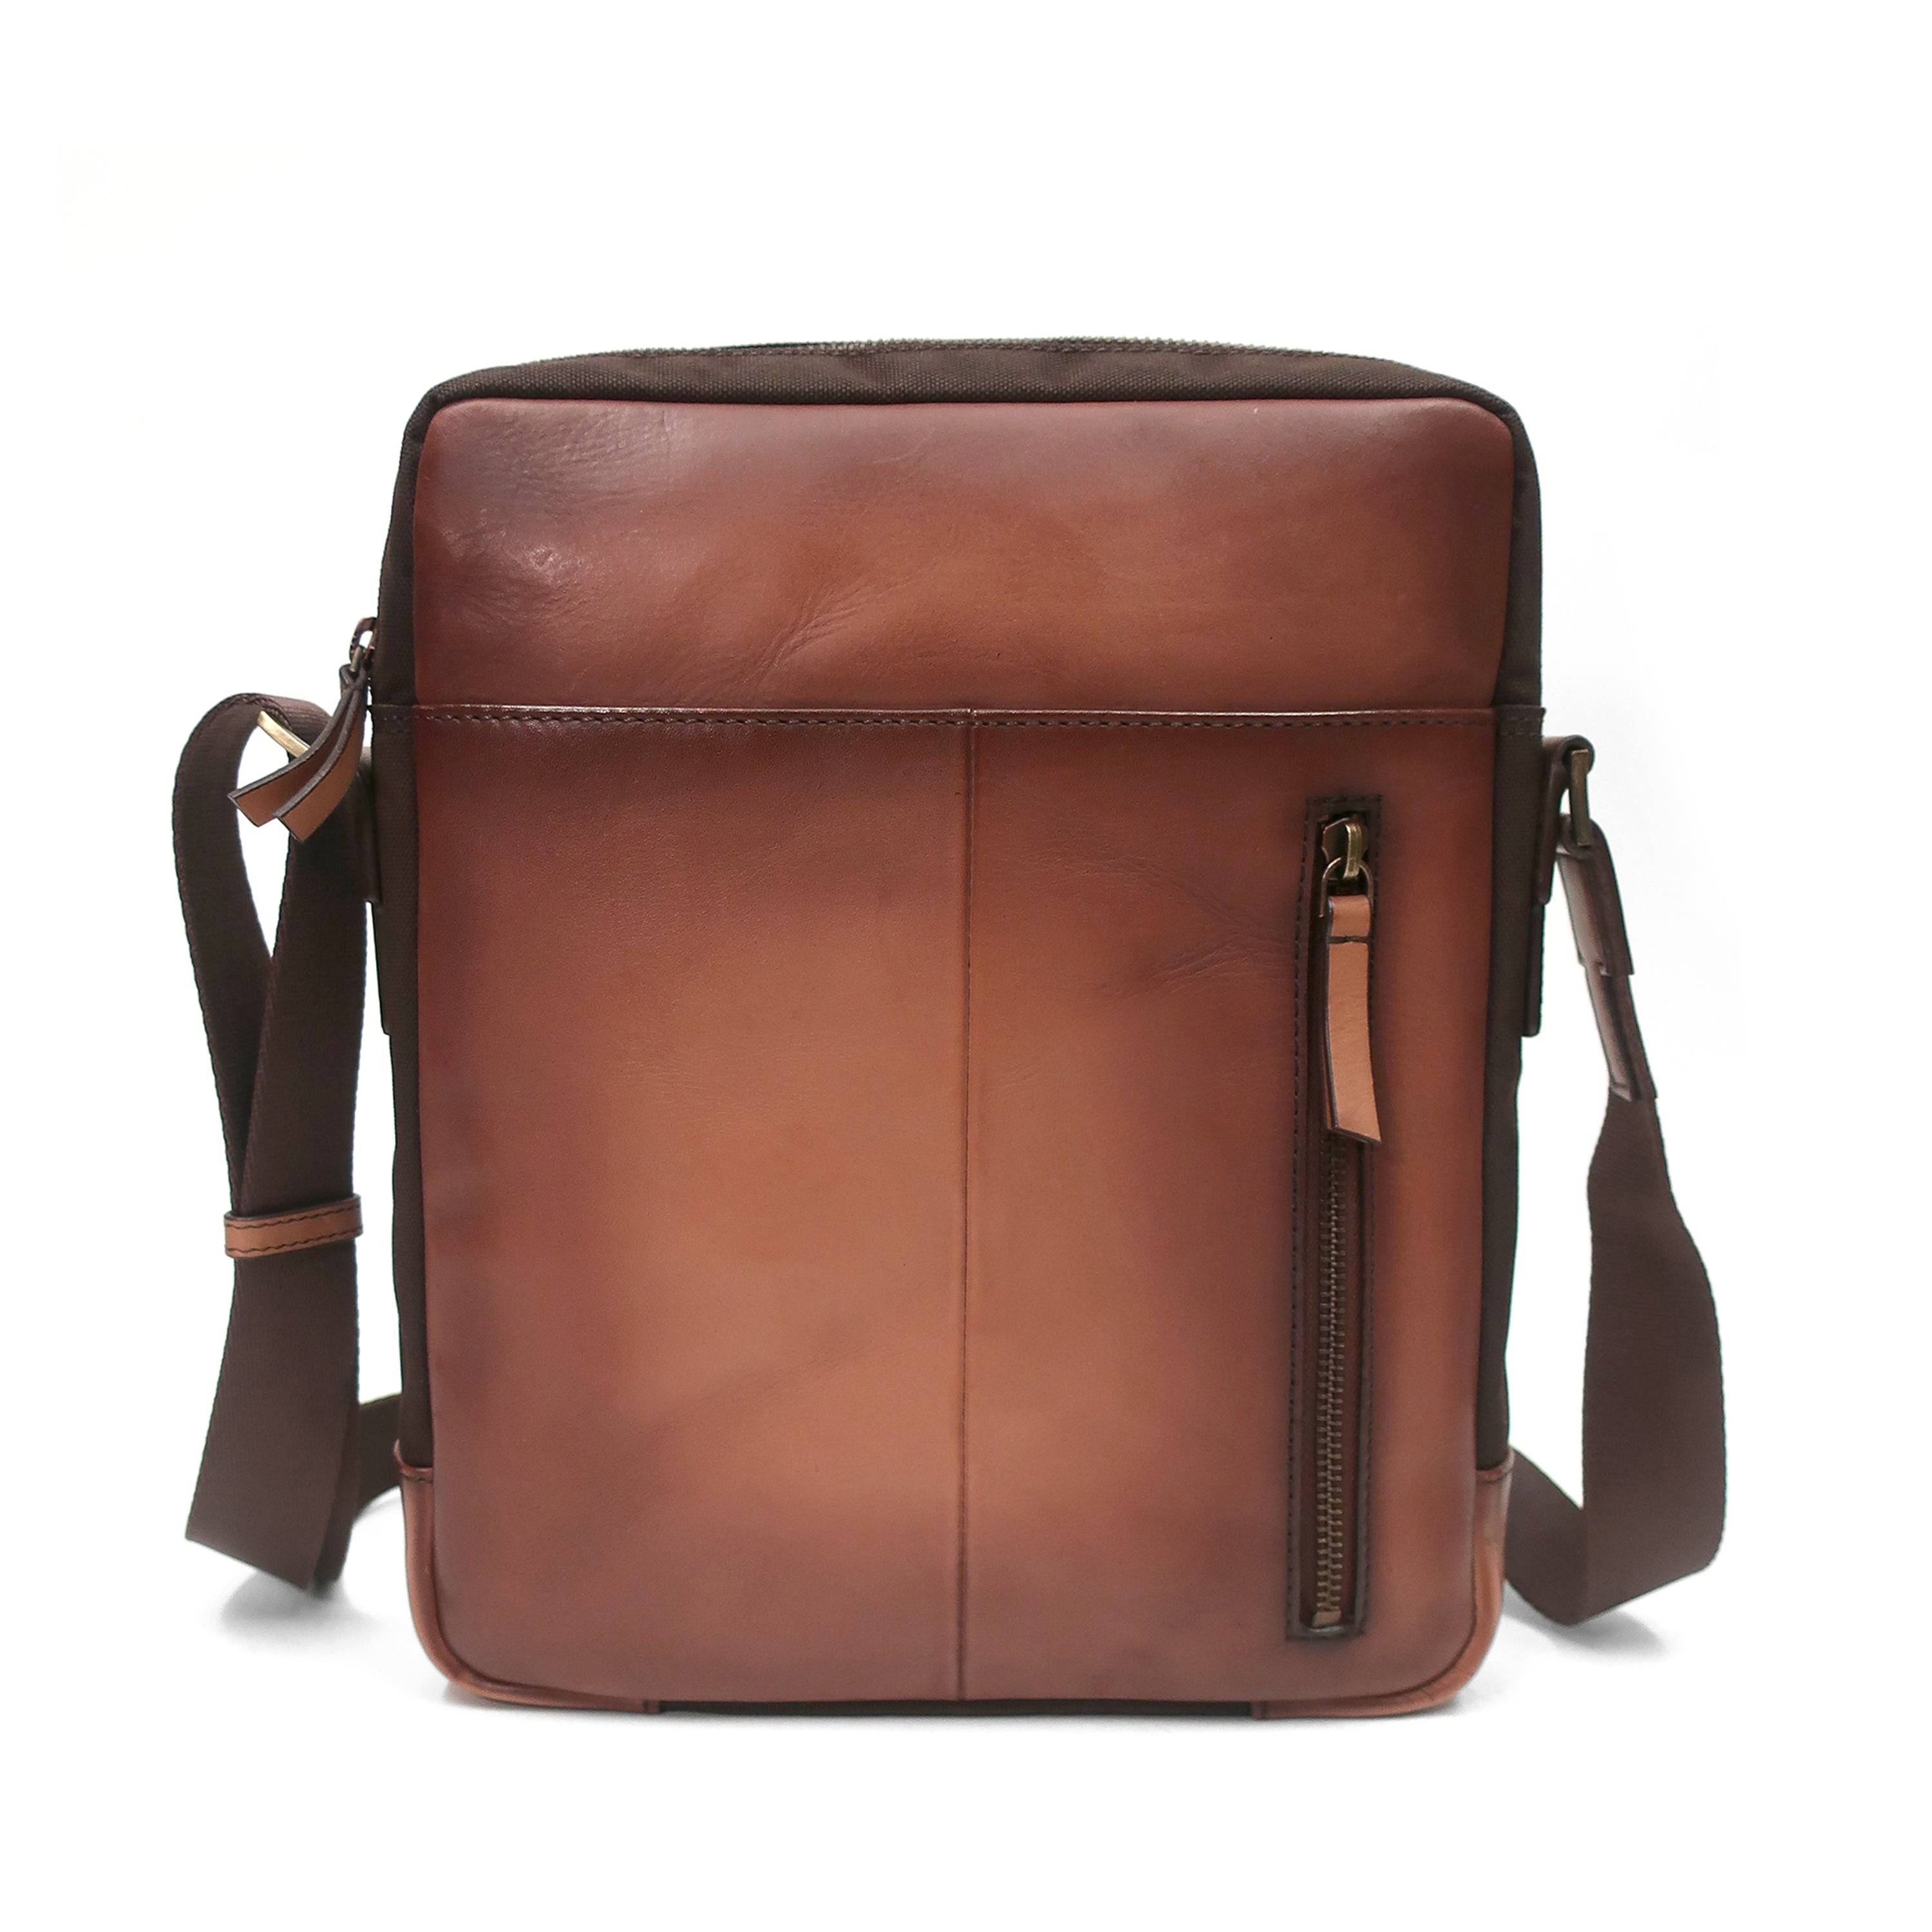 a brown leather messenger bag with a shoulder strap